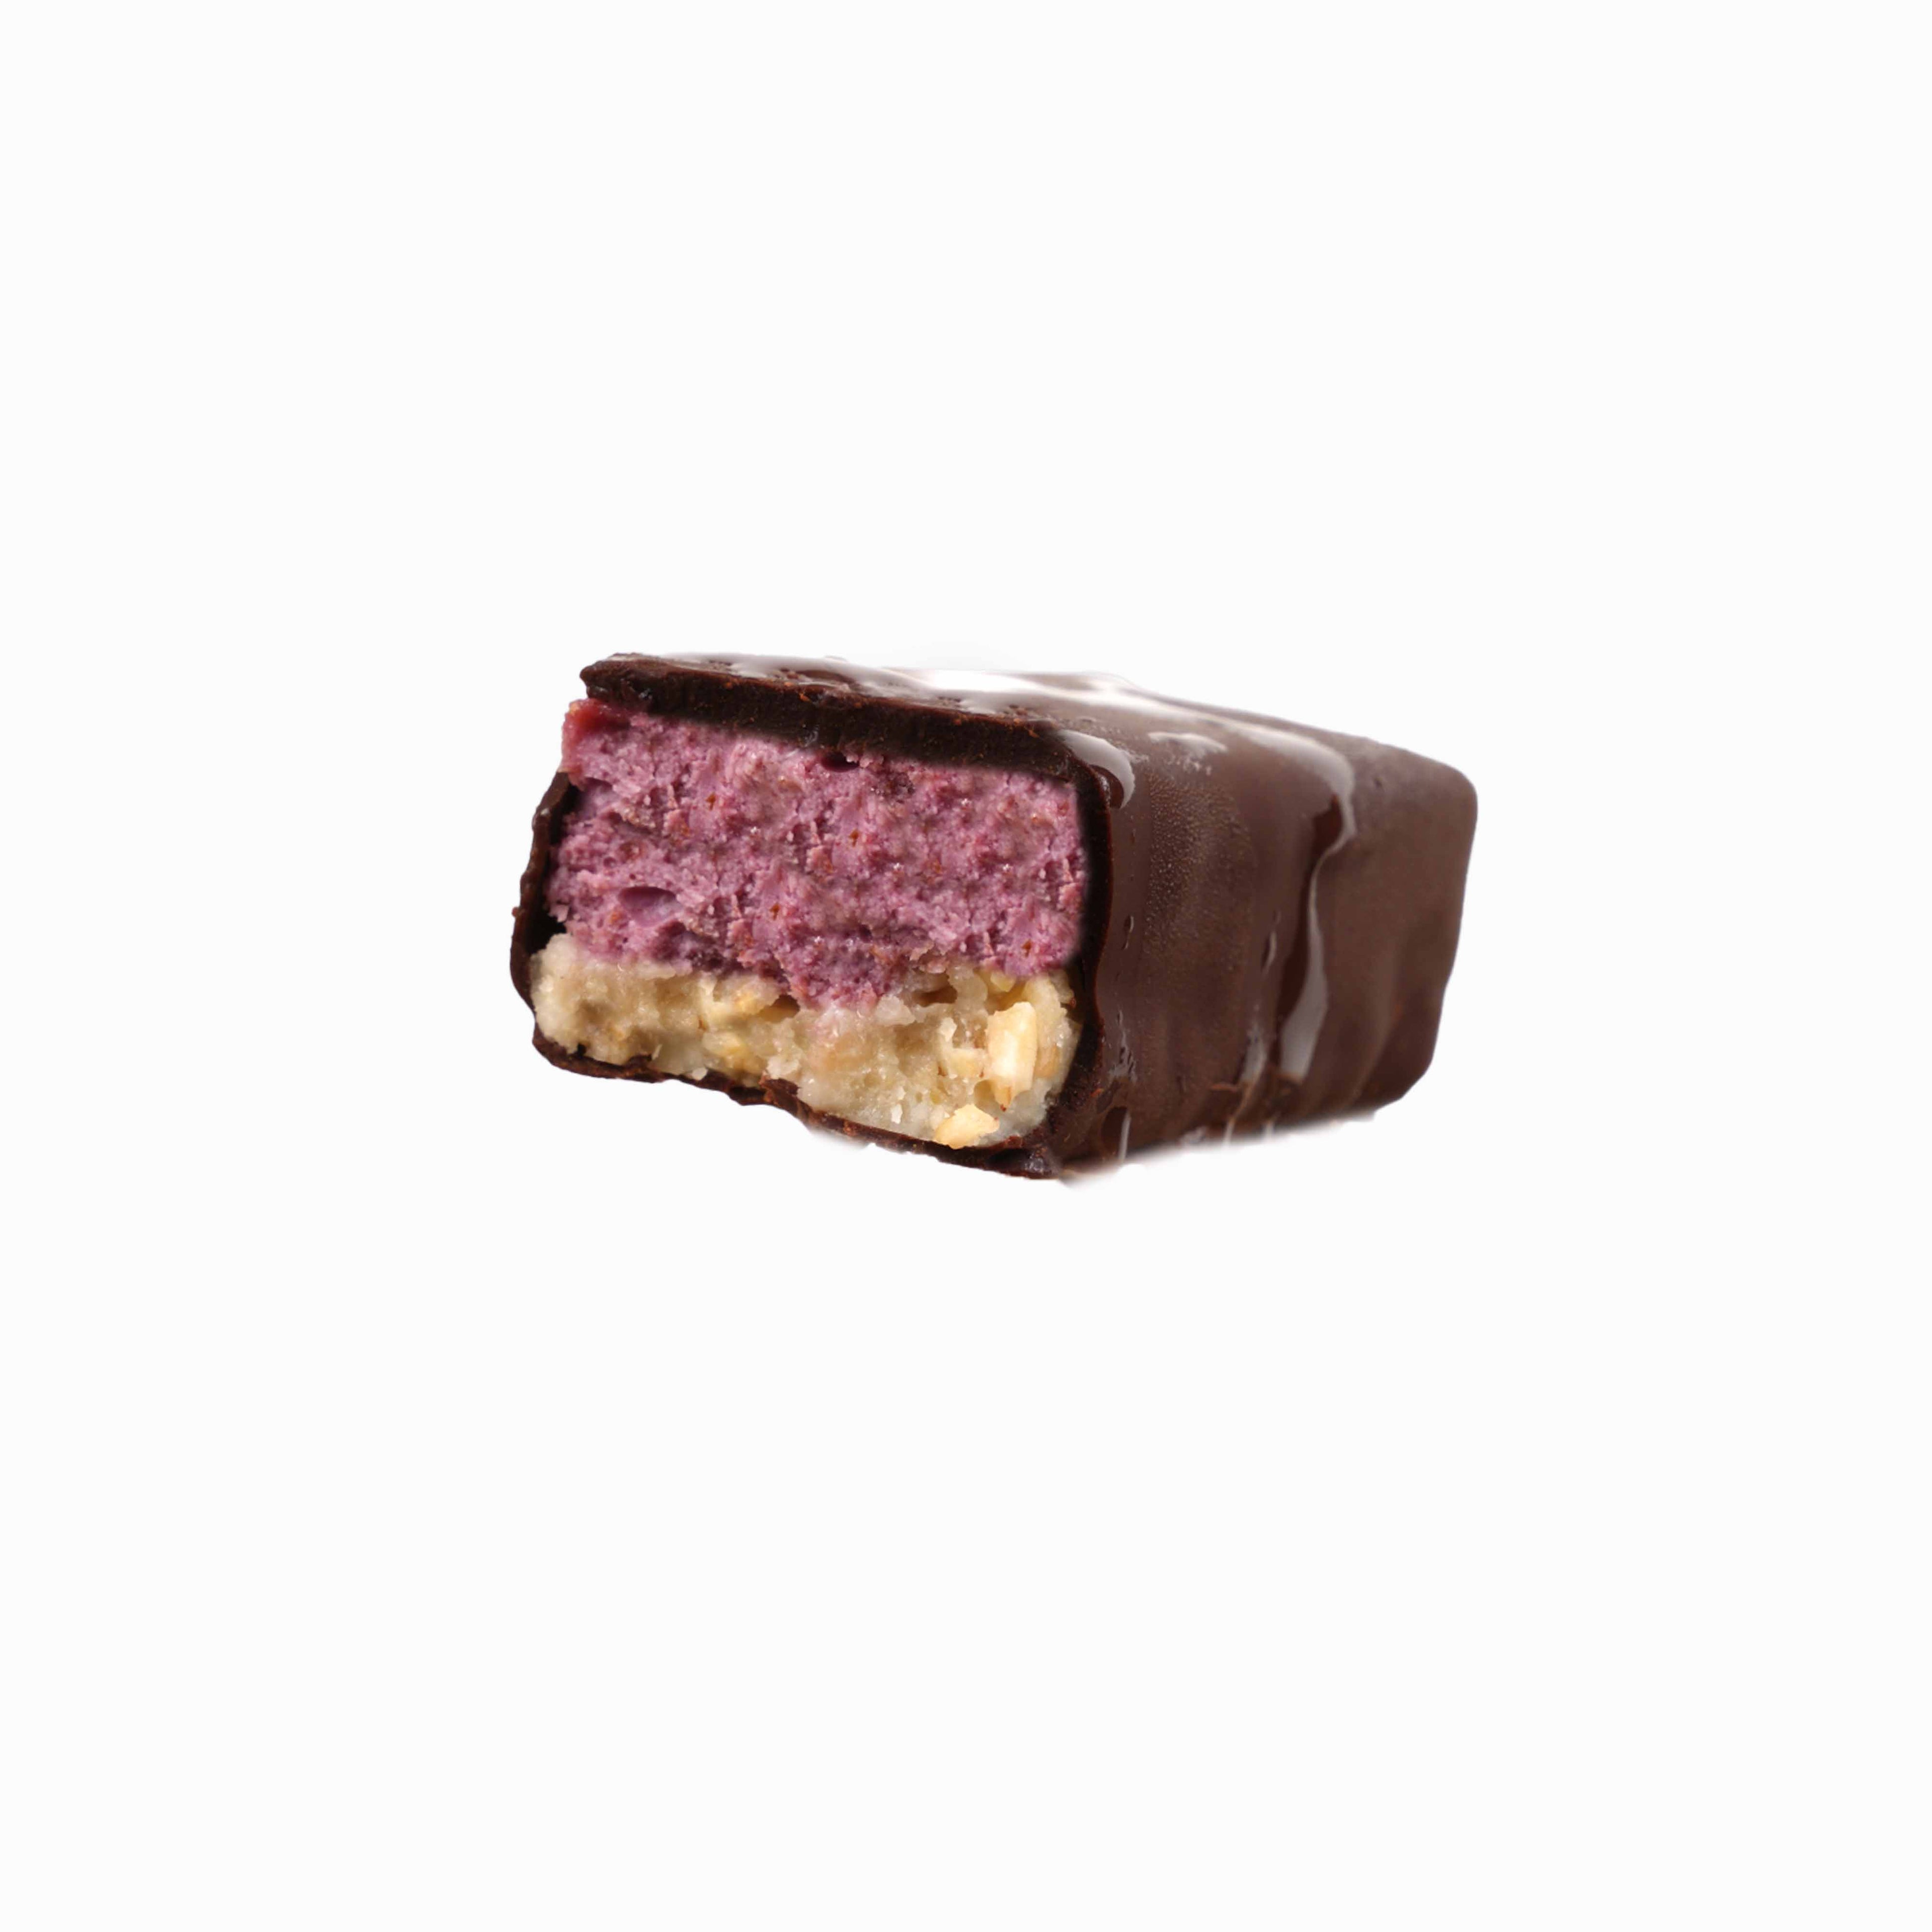 Bio Ice Cream Bars - Creamy Raspberry (10er Box)